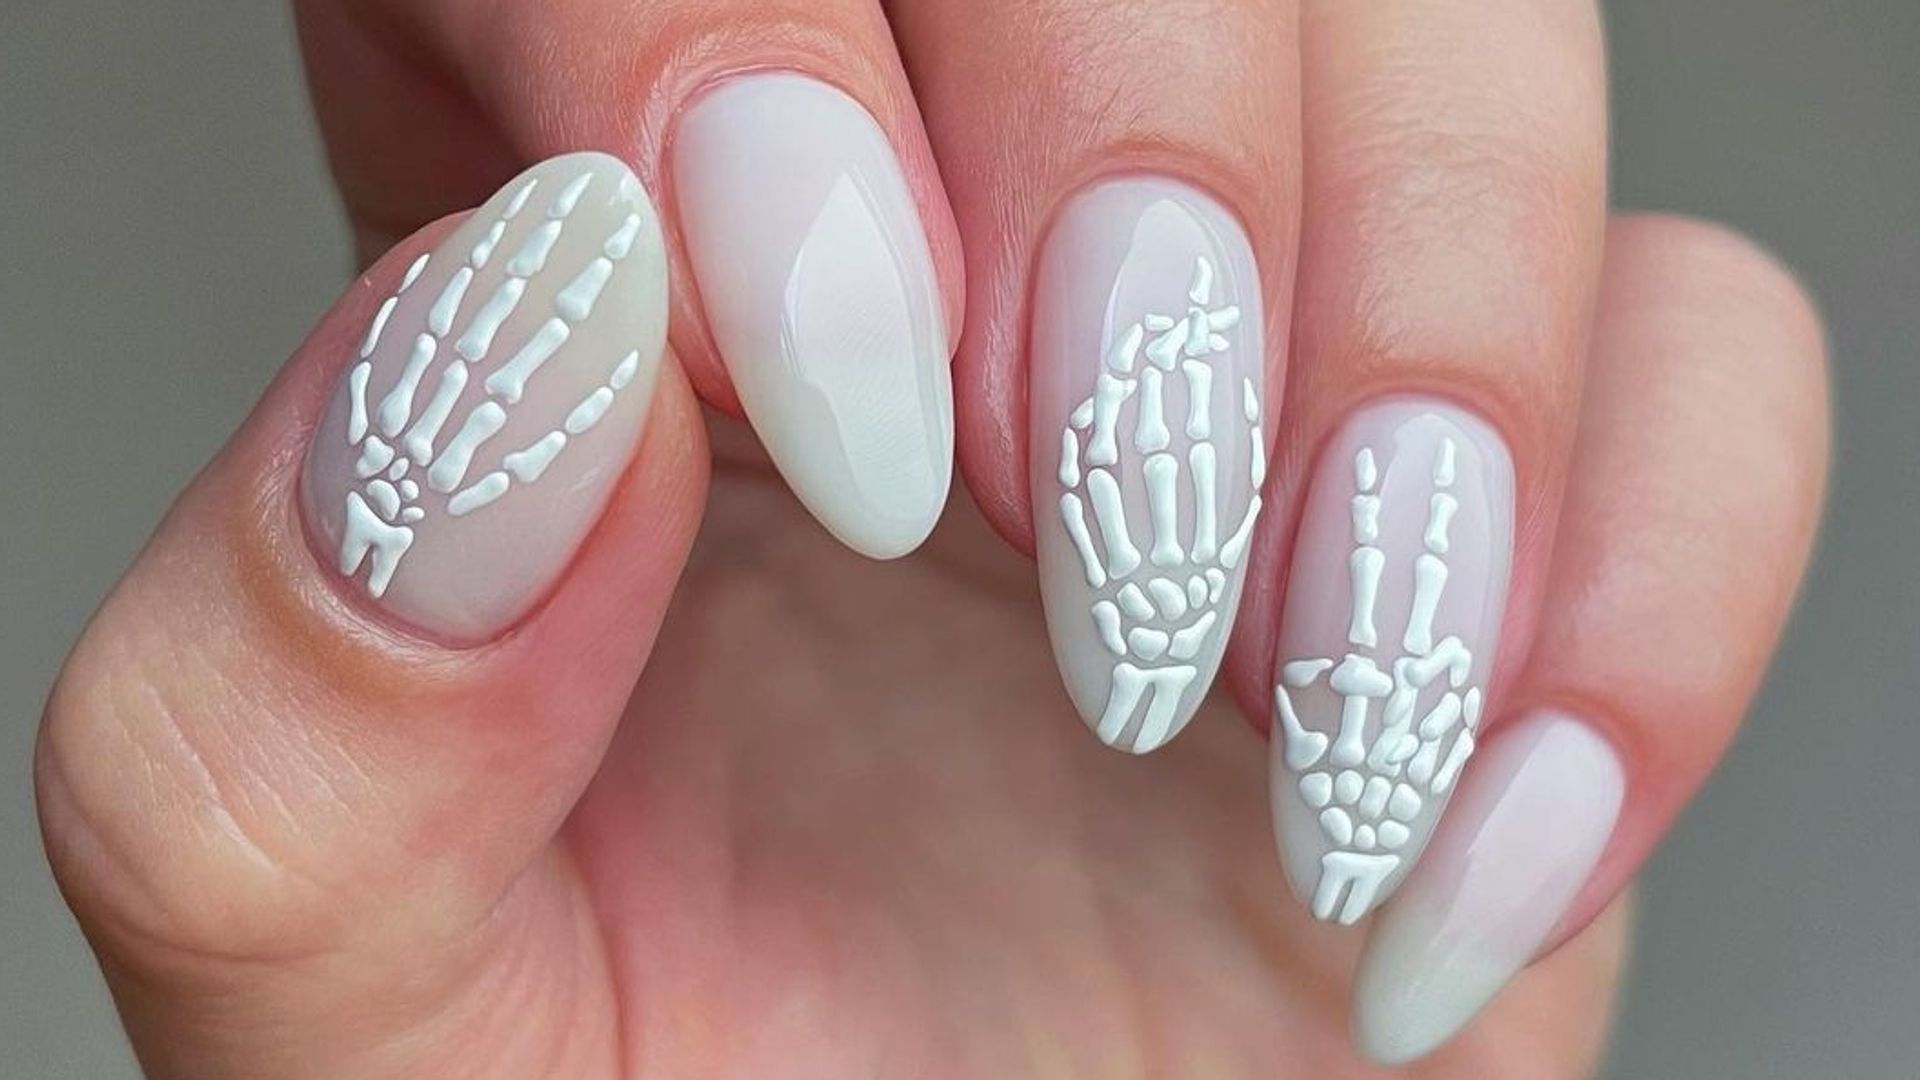 Skeleton nails 